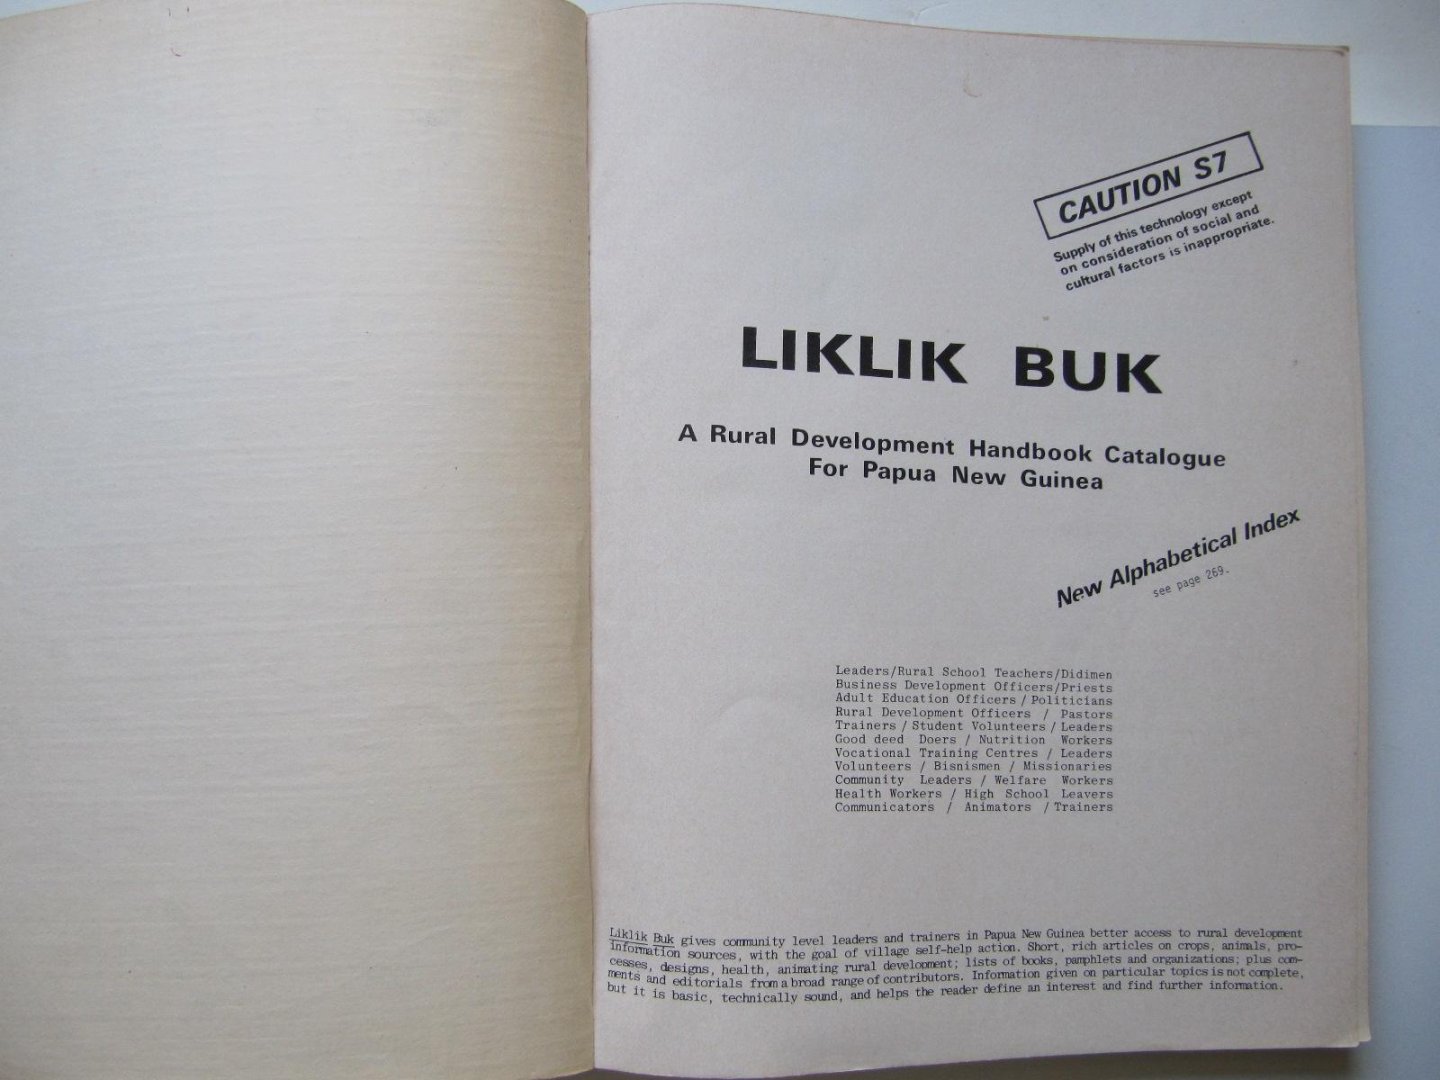 P.R. Hale and B.D. Williams - Liklik Buk, A rural Development Handbook Catalogue for Papua New Guinea